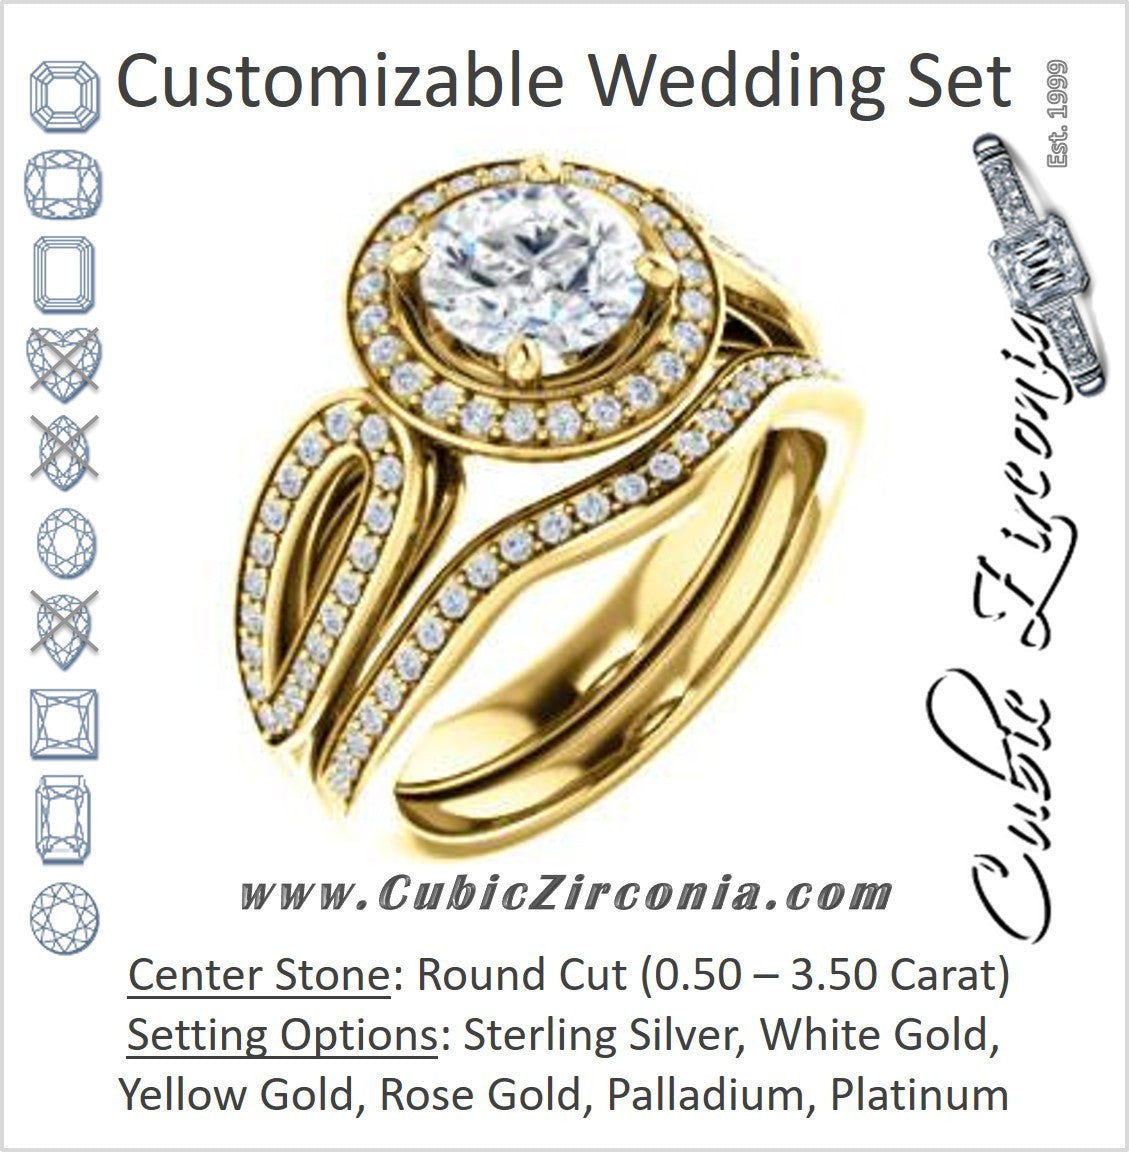 CZ Wedding Set, featuring The Jordyn Elitza engagement ring (Customizable Halo-Style Round Cut with Twisting Pavé Split-Shank)